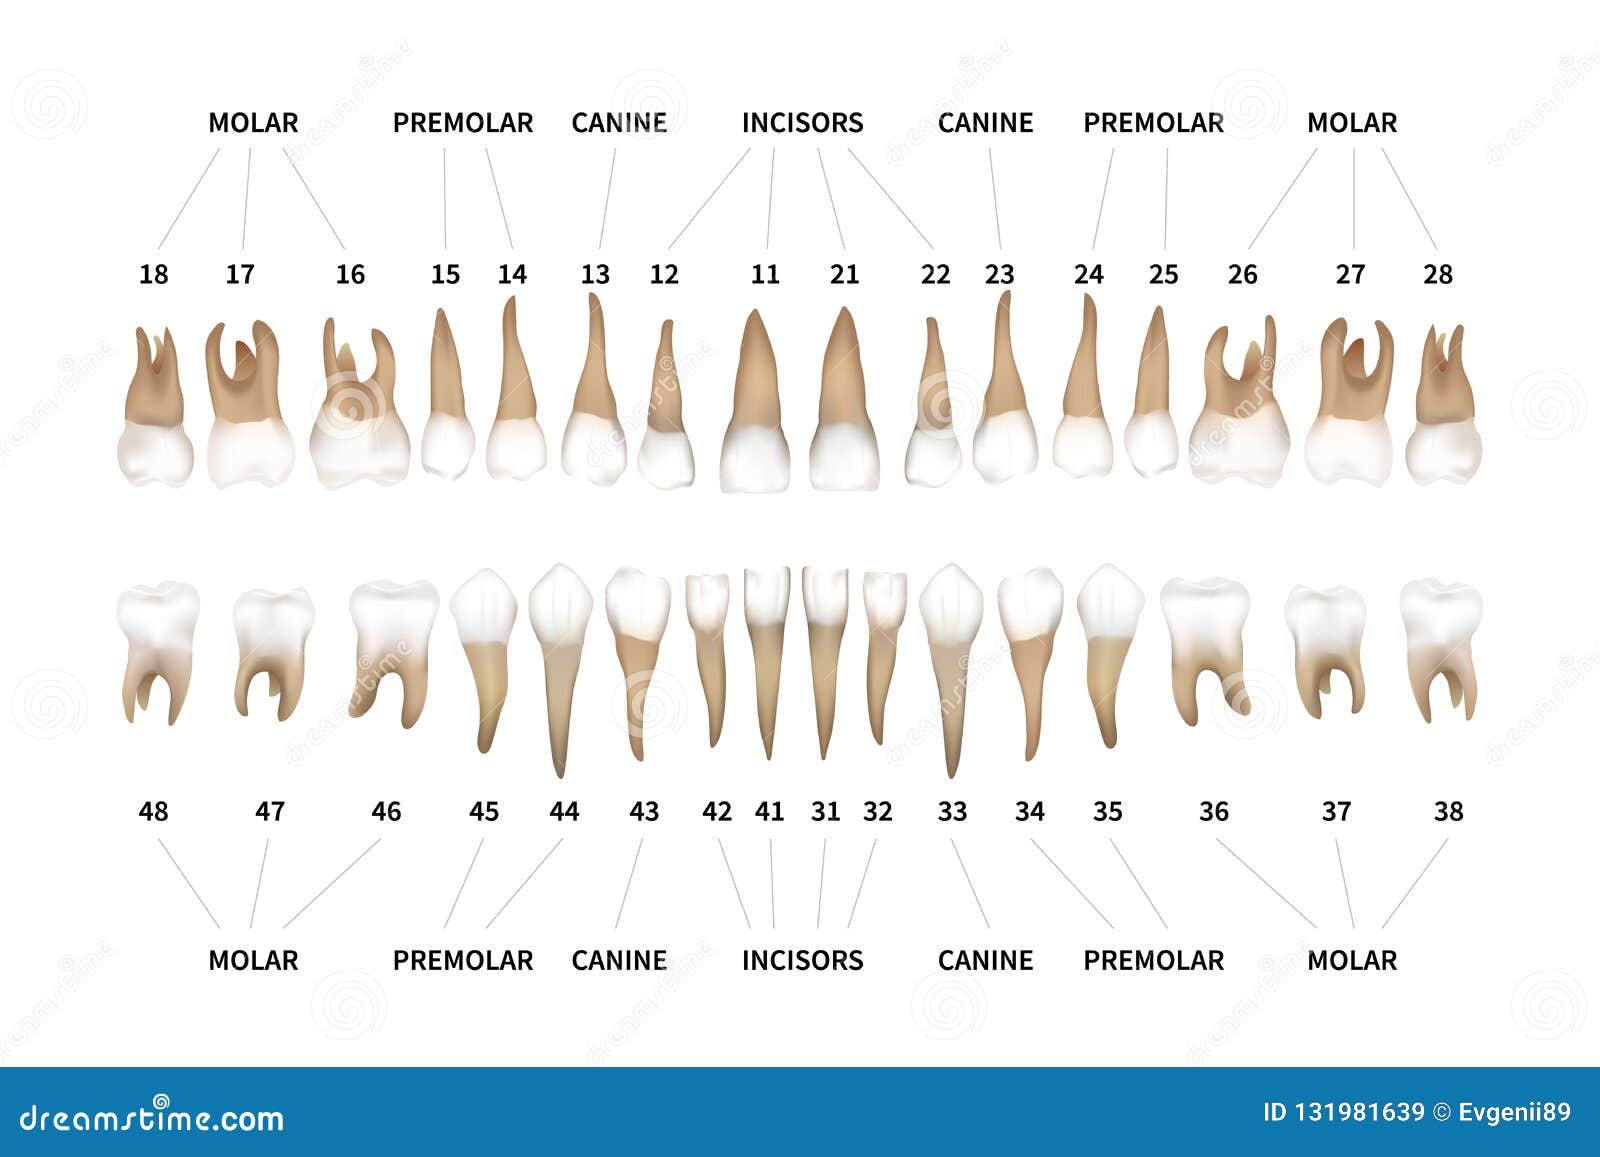 Teeth Count Chart